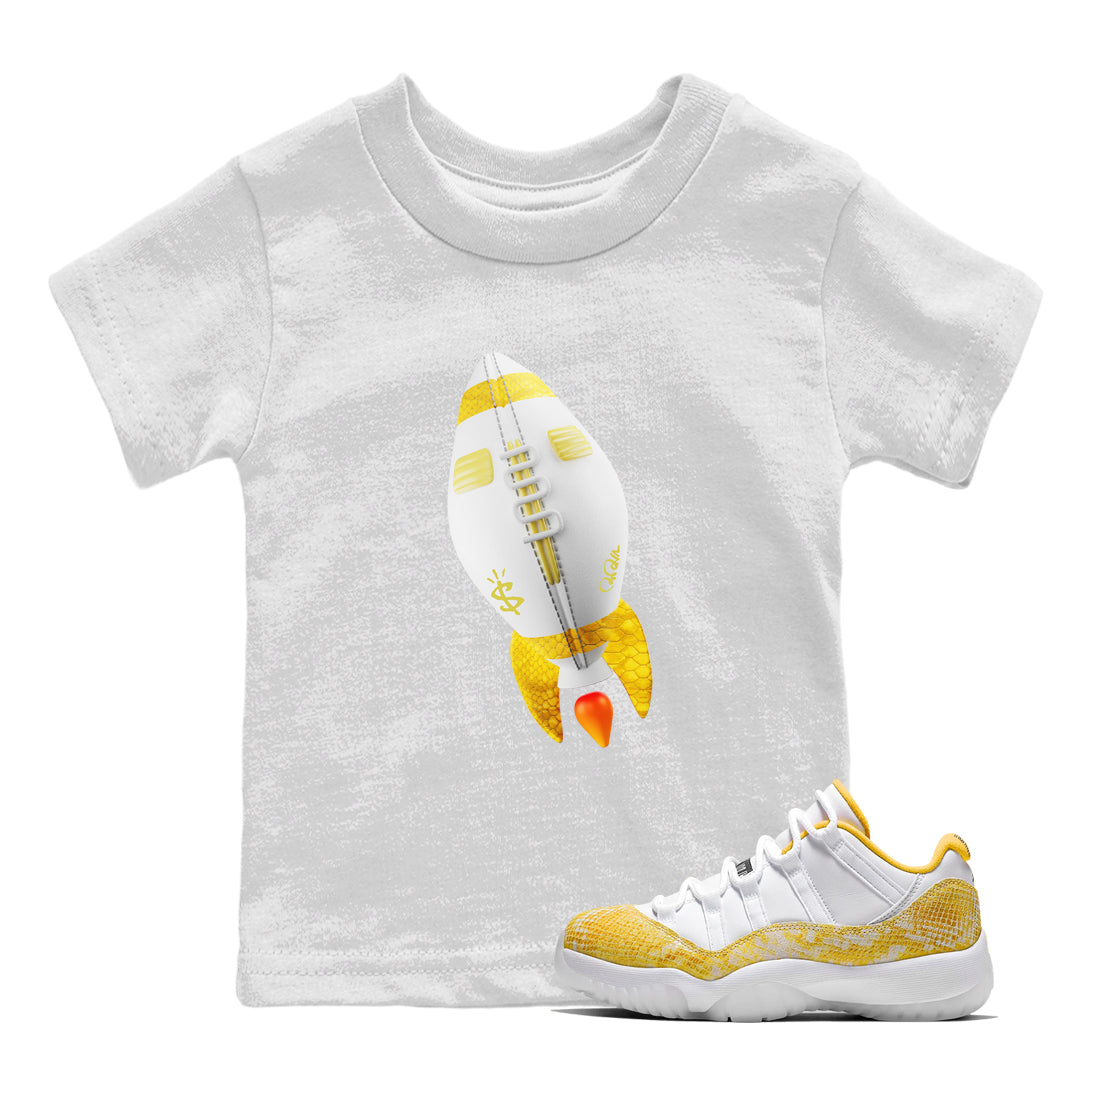 Air Jordan 11 Yellow Python Sneaker Match Tees Rugby Rocket Shirts AJ11 Yellow Python Drip Gear Zone Kids Shirts White 1